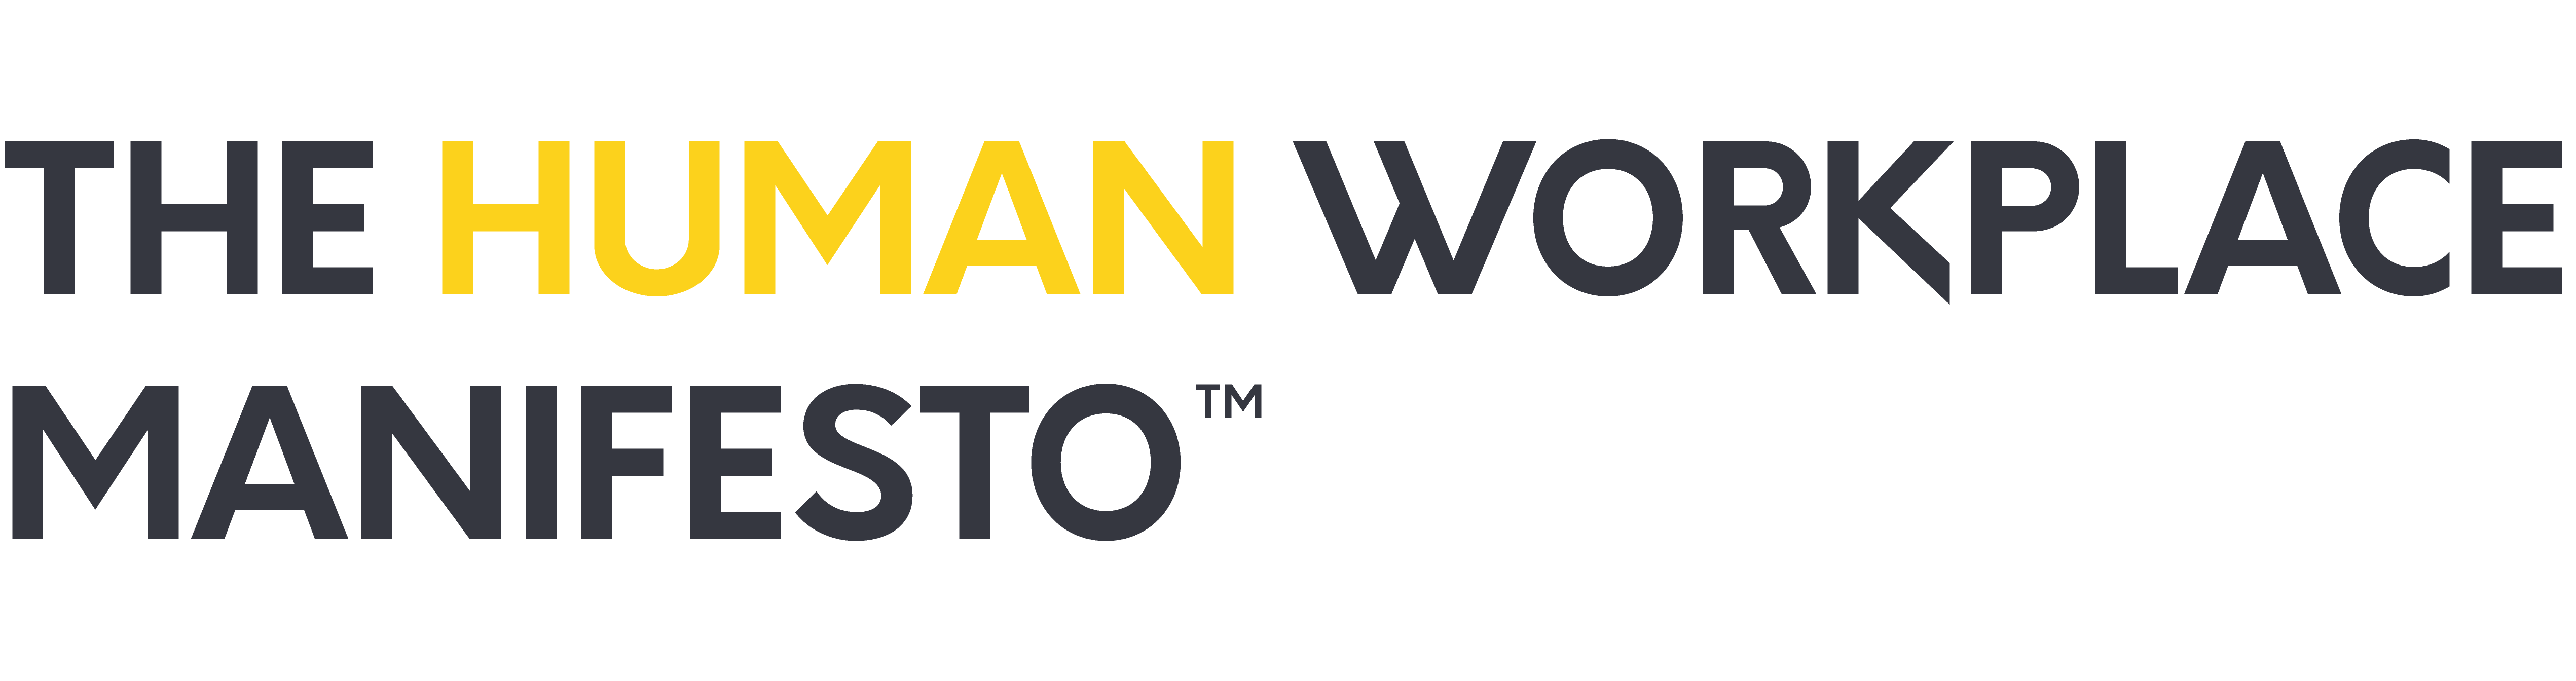 Workplace Logo - Home - The Human Workplace Manifesto™